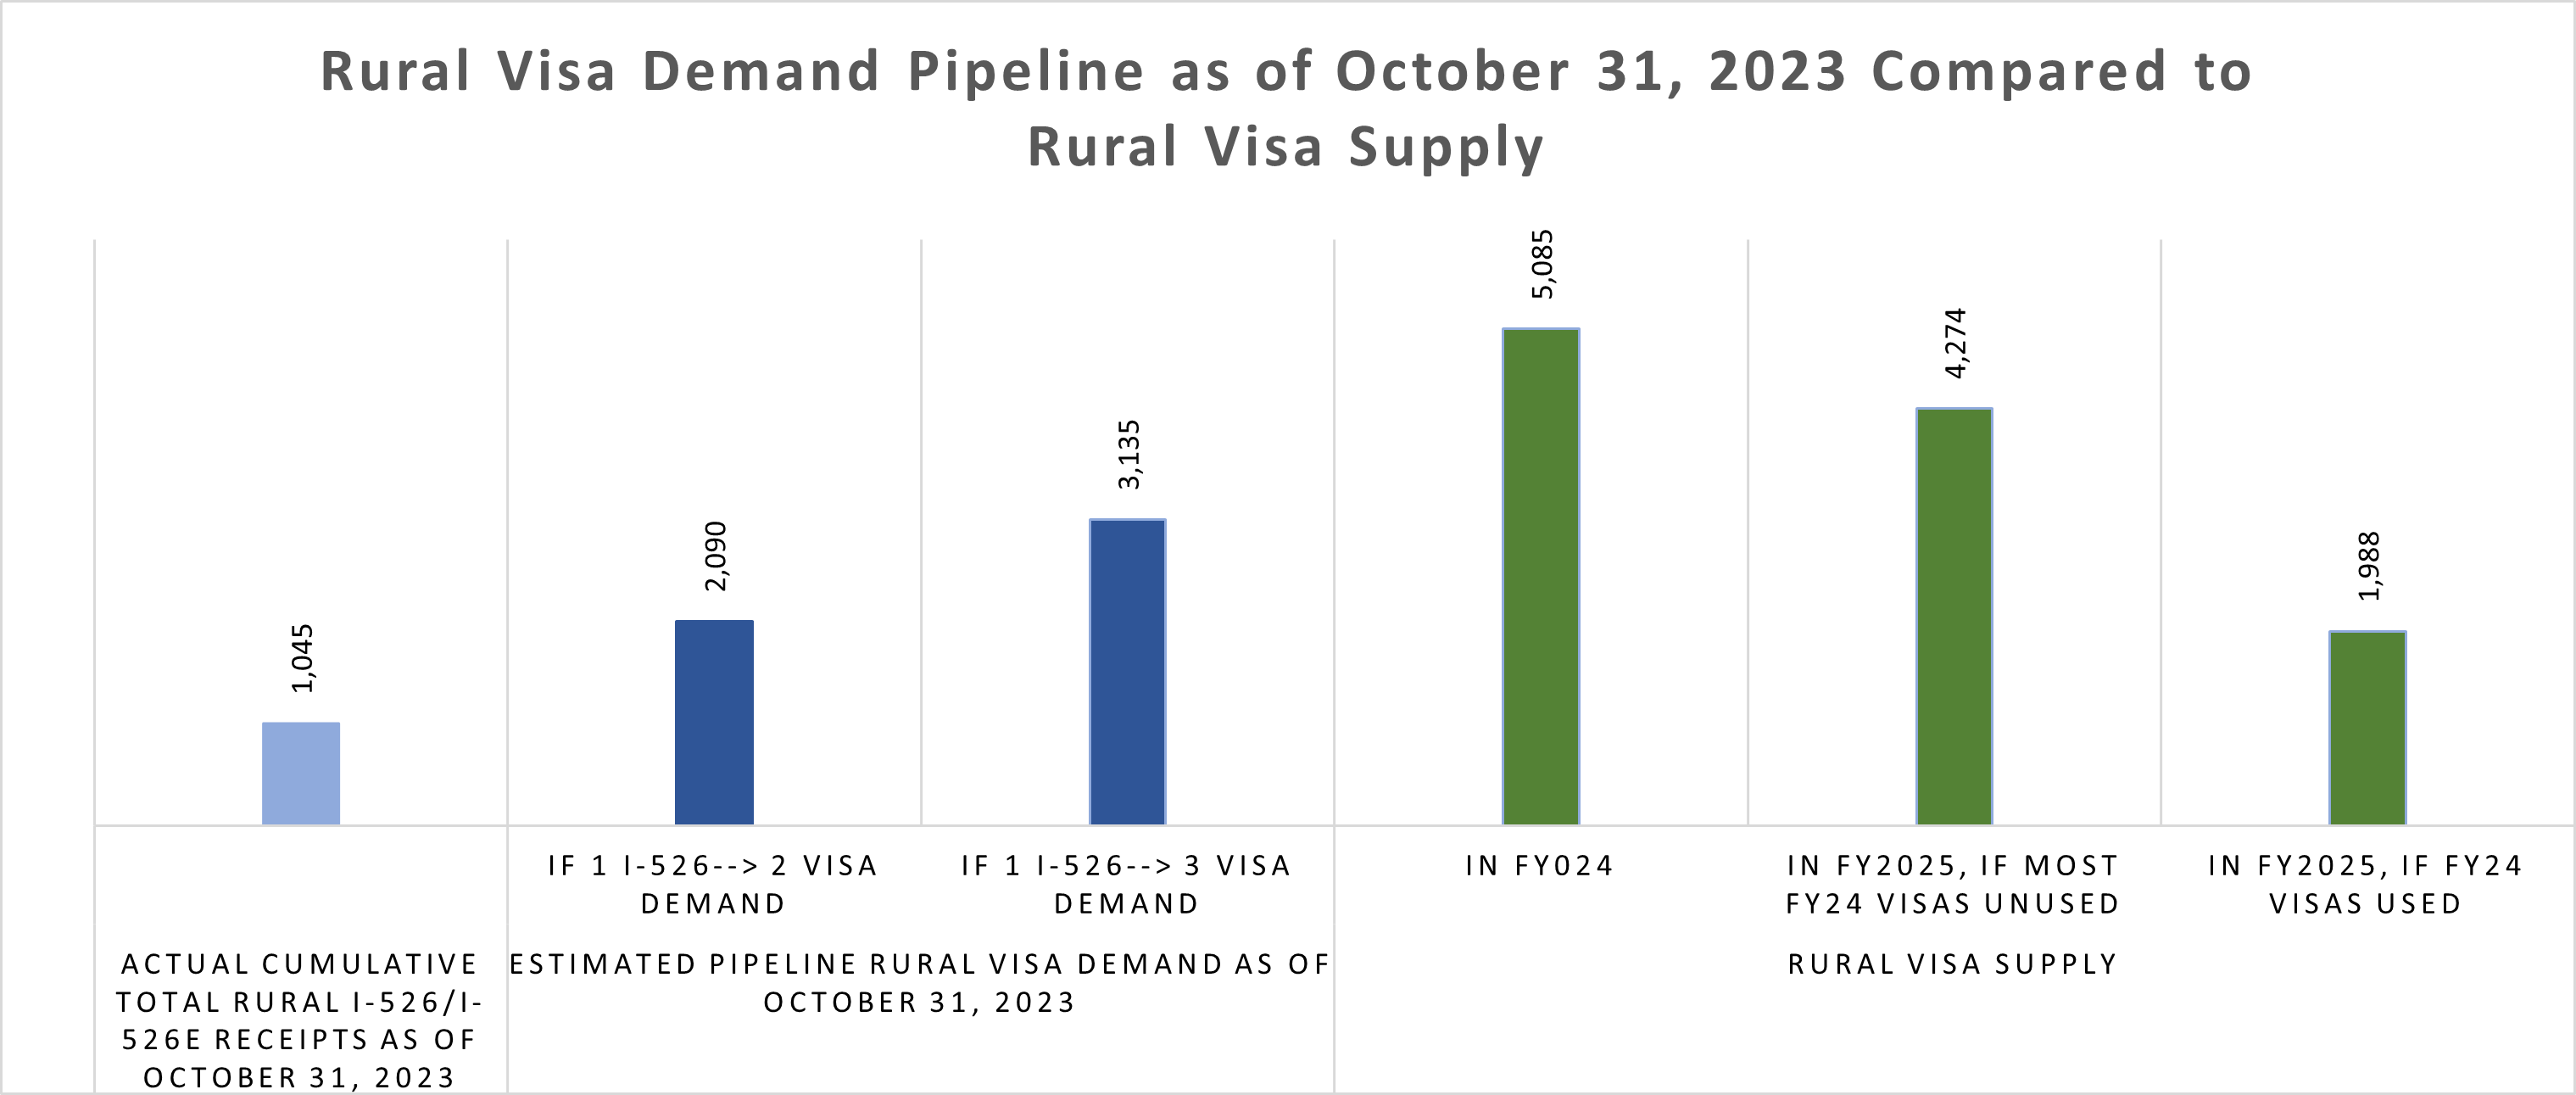 Rural Visa Demand Pipeline as of October 31, 2023 Compared to Rural Visa Supply